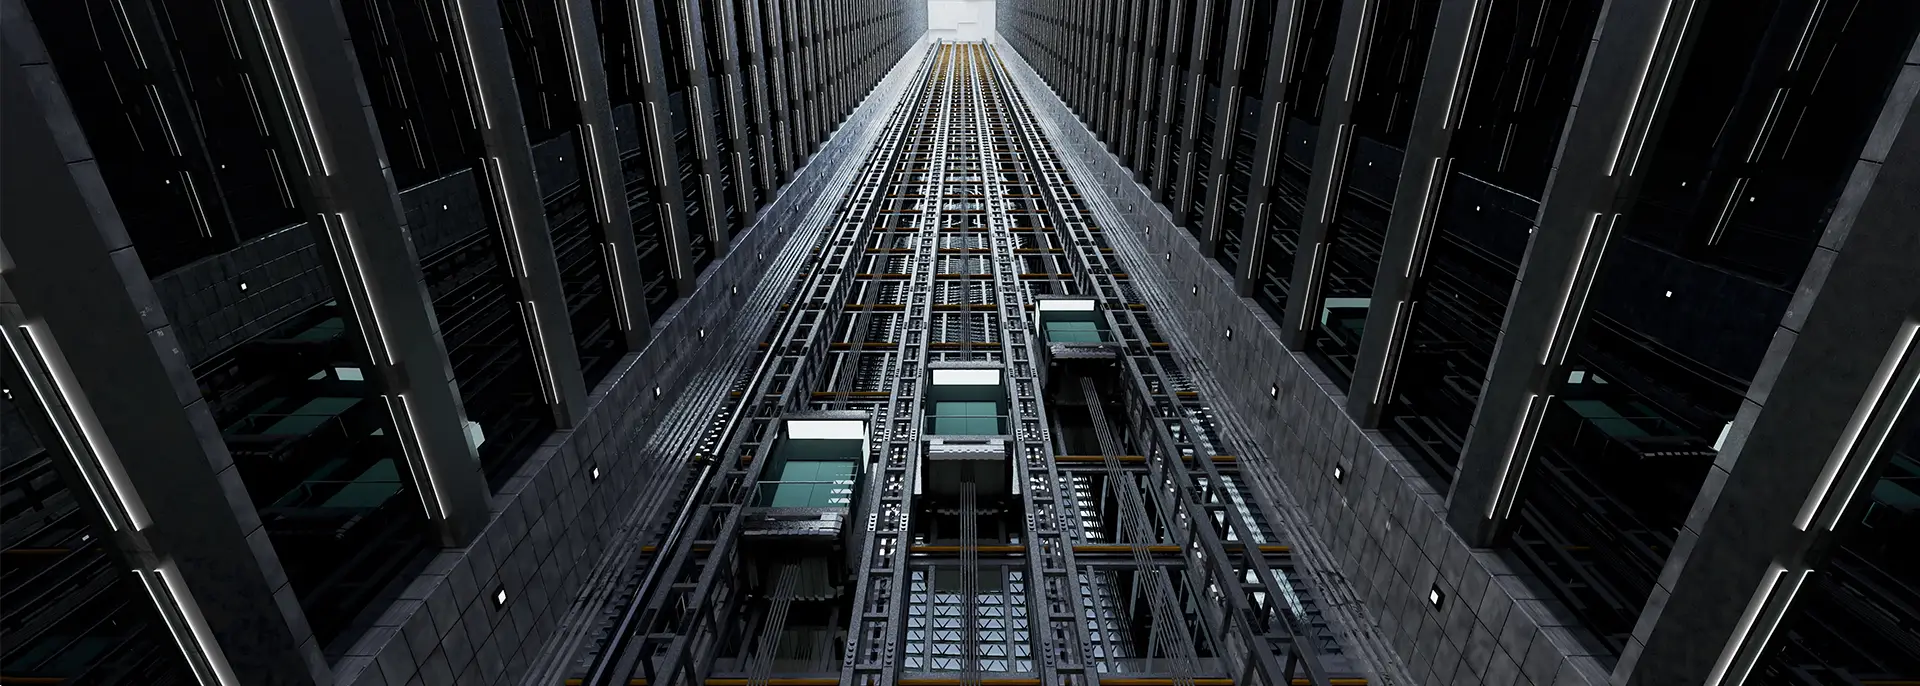 An open elevator shaft at the business center